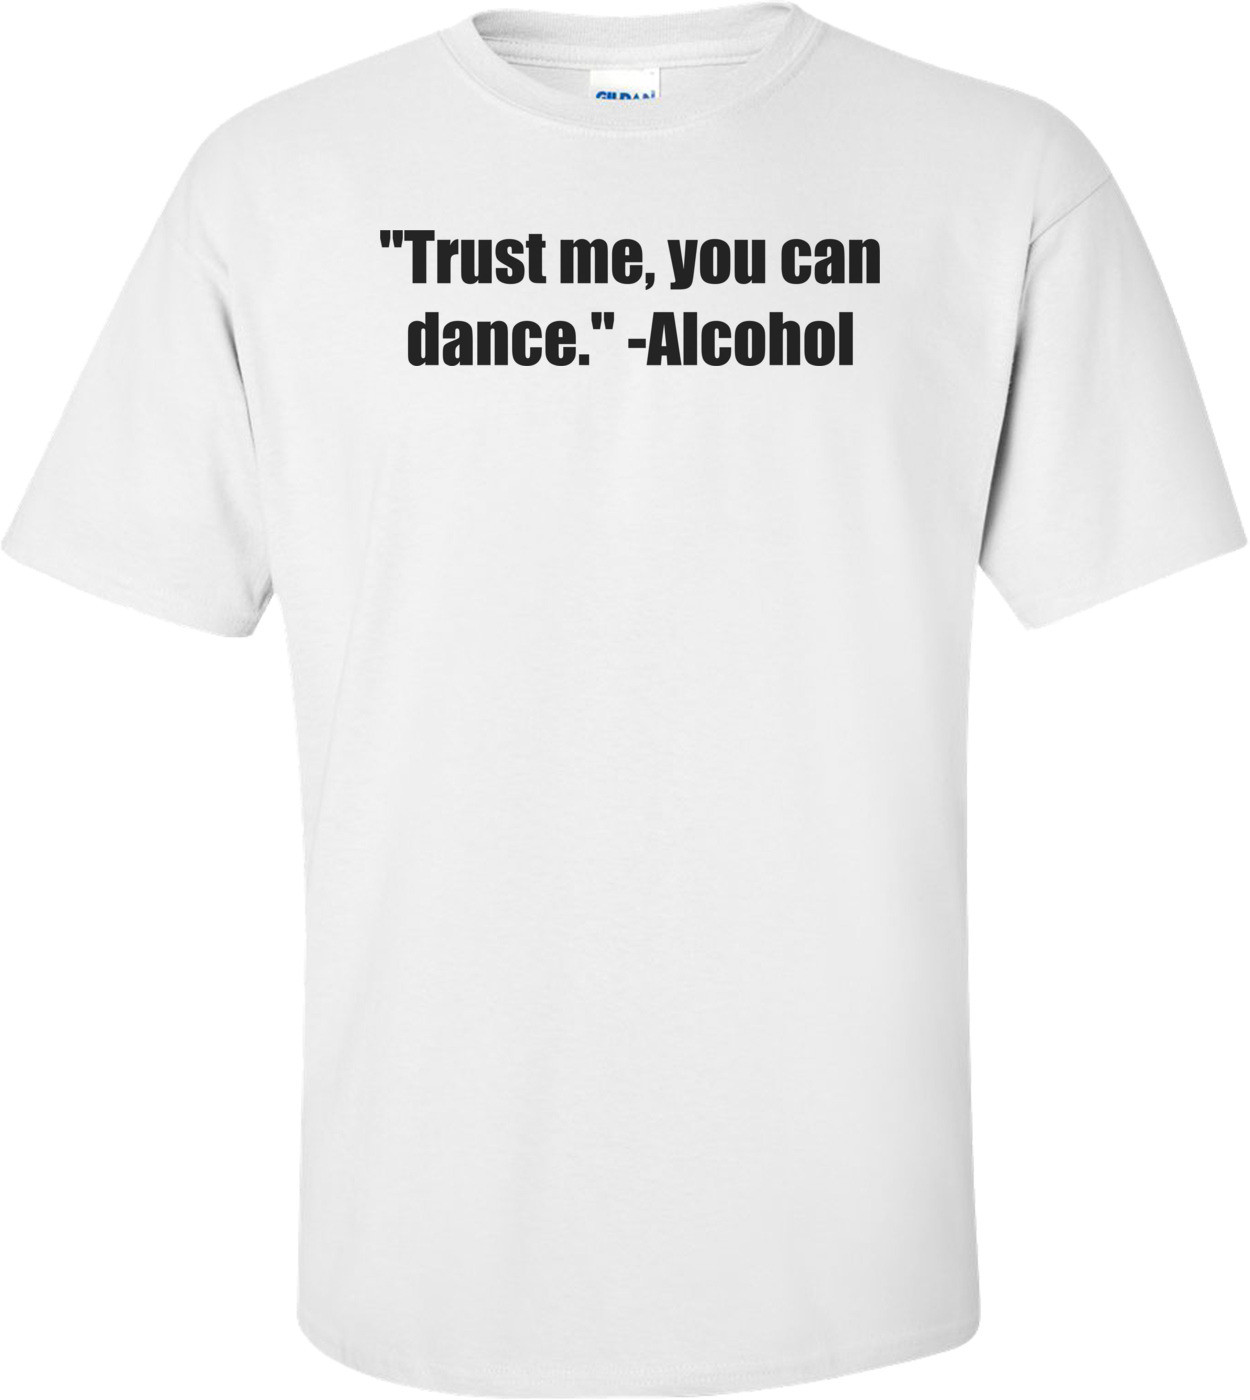 "Trust me, you can dance." -Alcohol Shirt